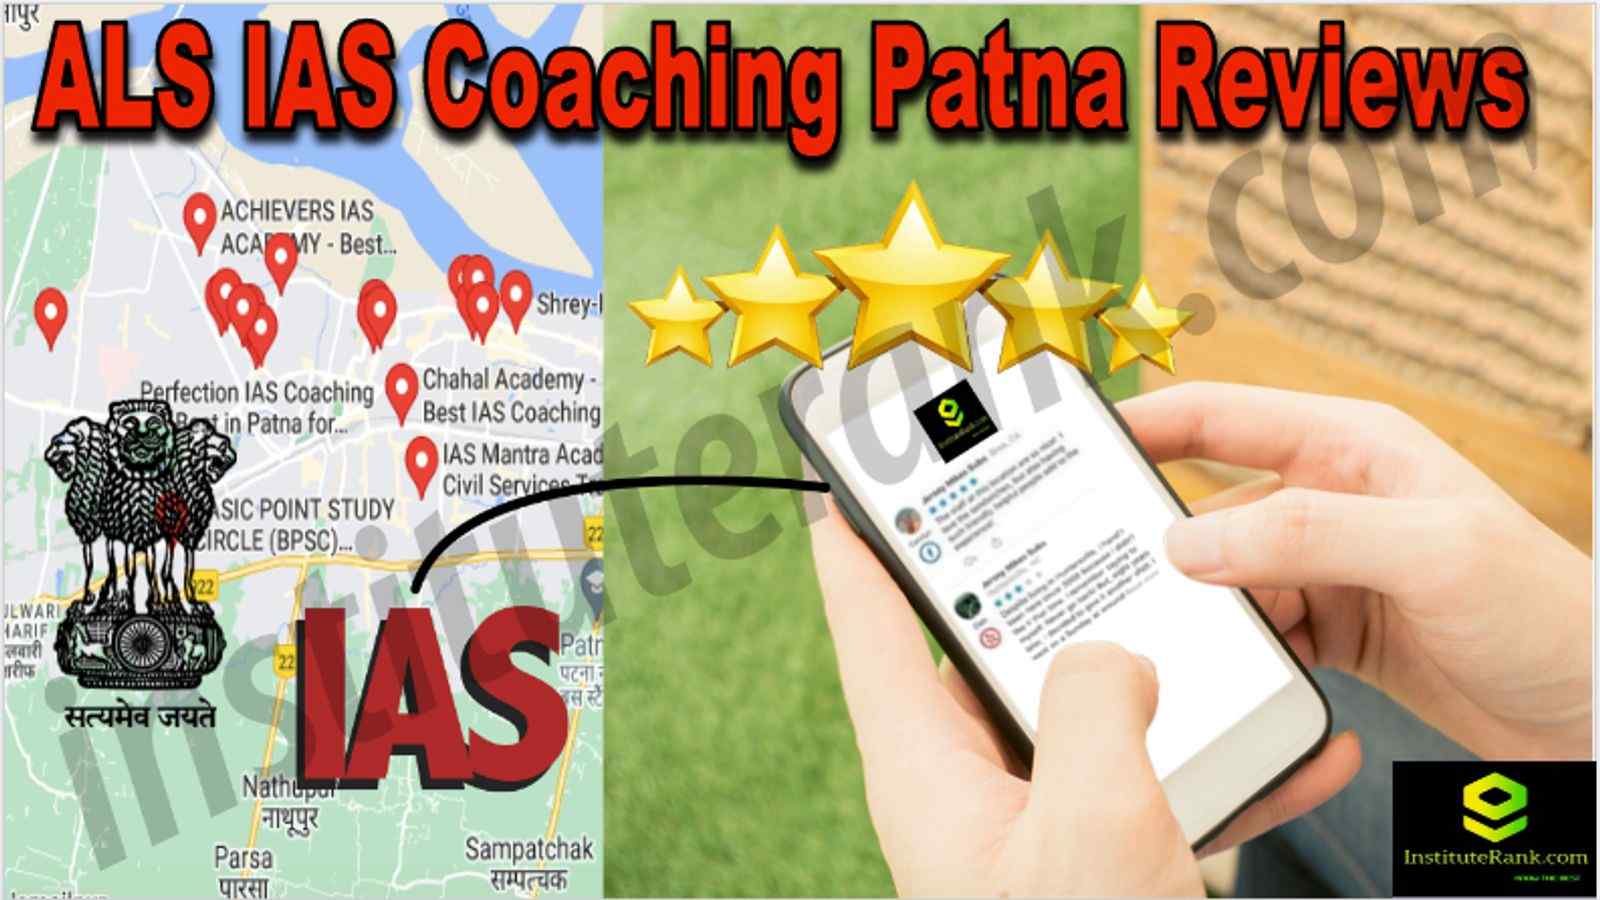 ALS IAS Coaching Patna Reviews